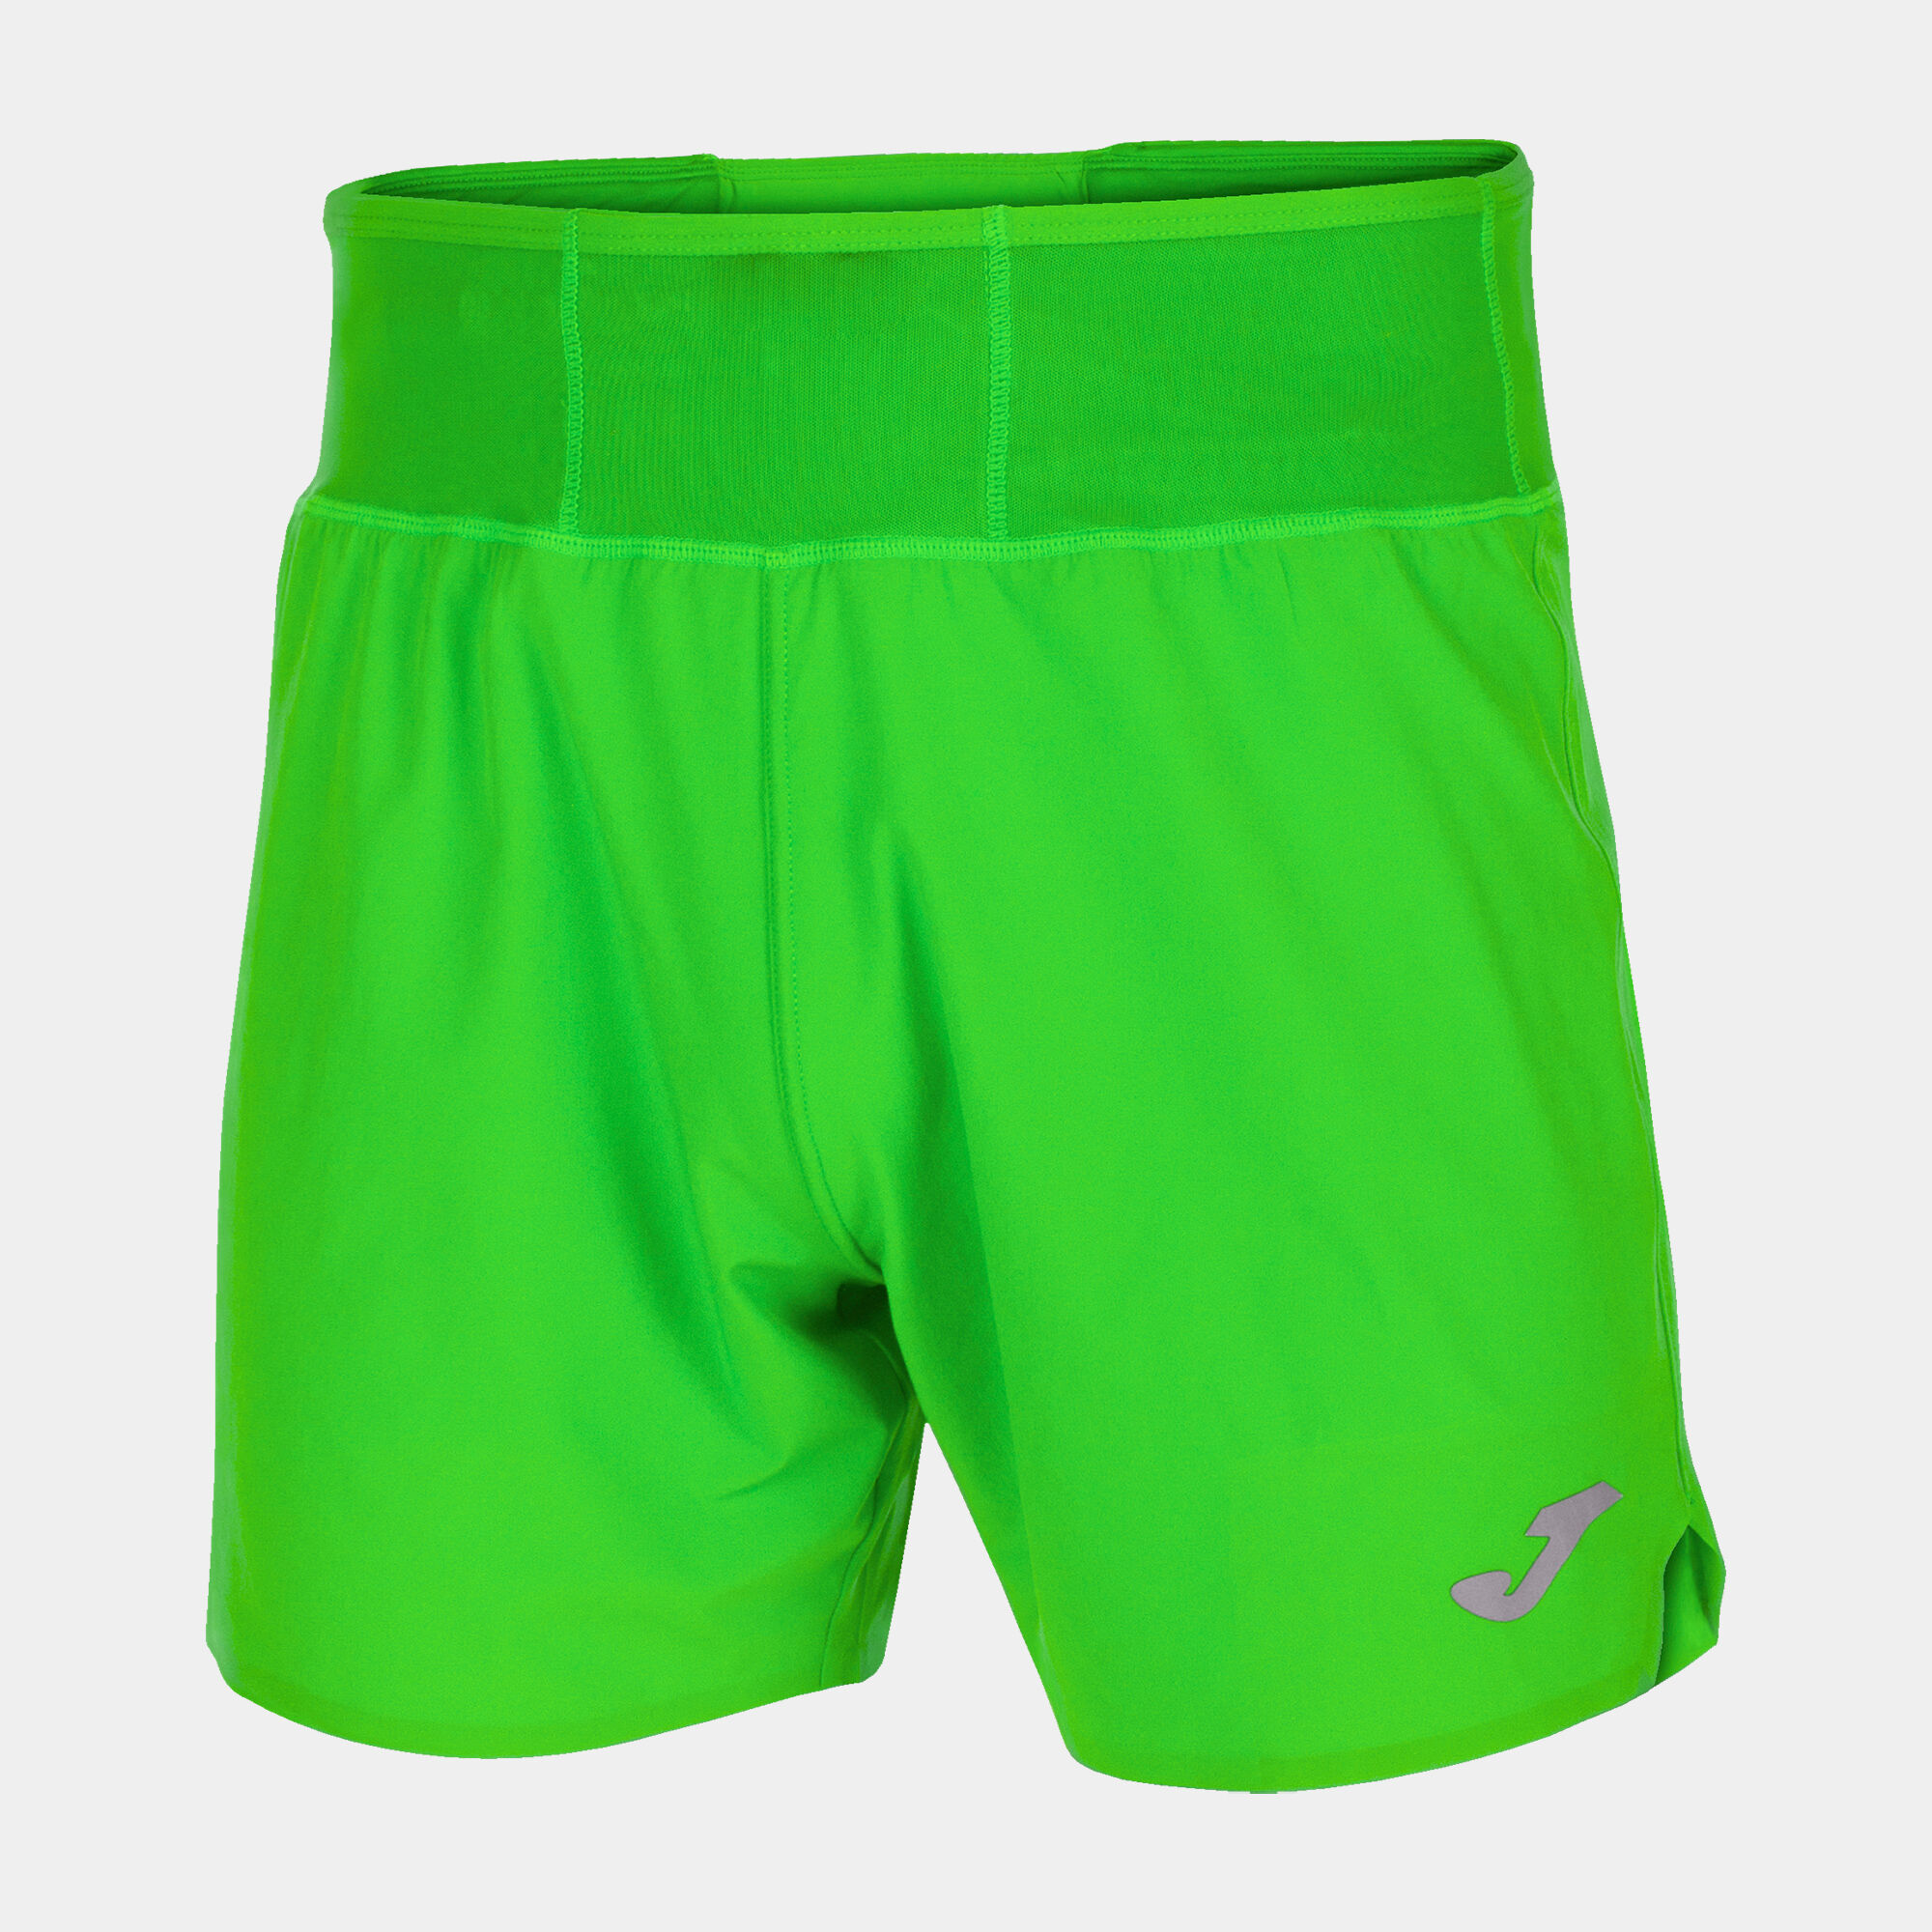 Pantaloncini uomo R-Combi verde fluorescente